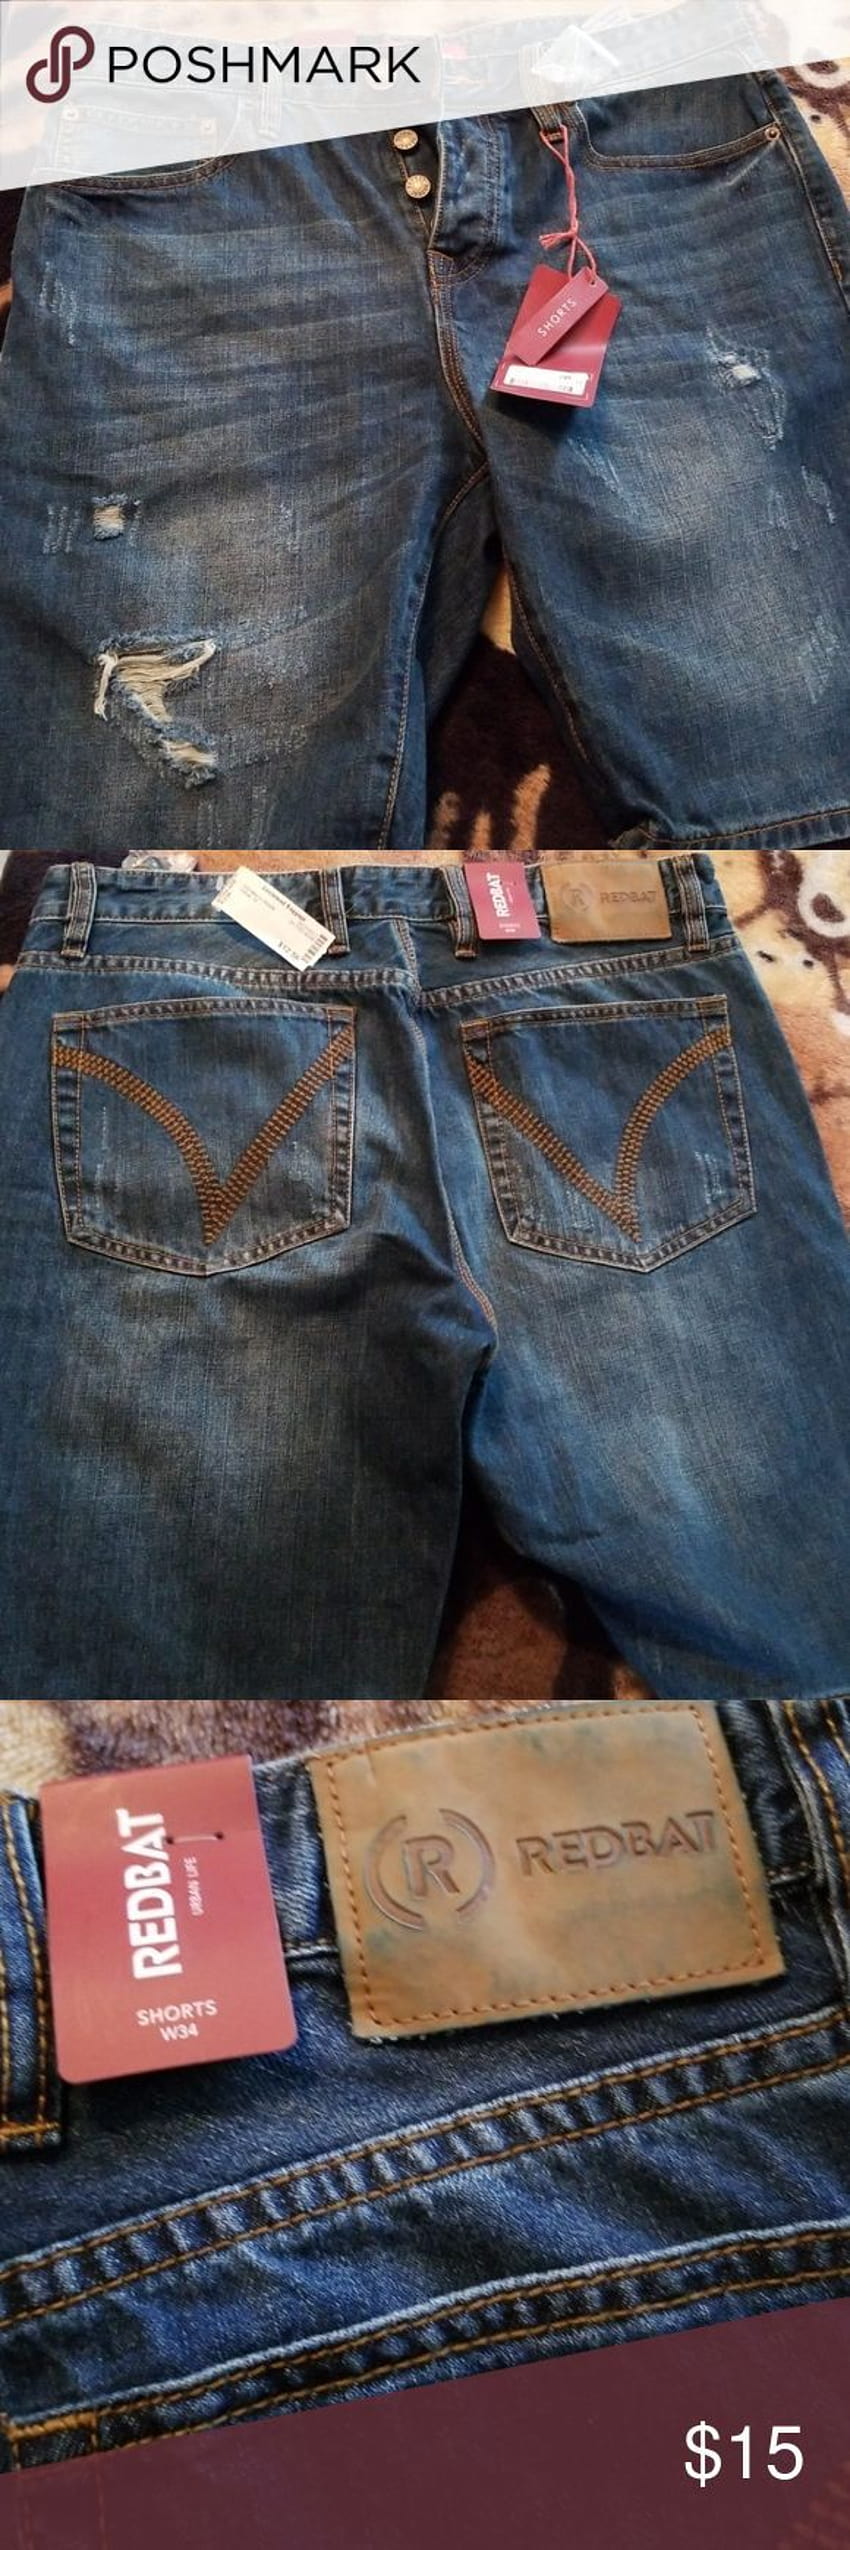 sama #tiktokfashion #redbat #jeans #waxjeans #fyp @Redbat Official